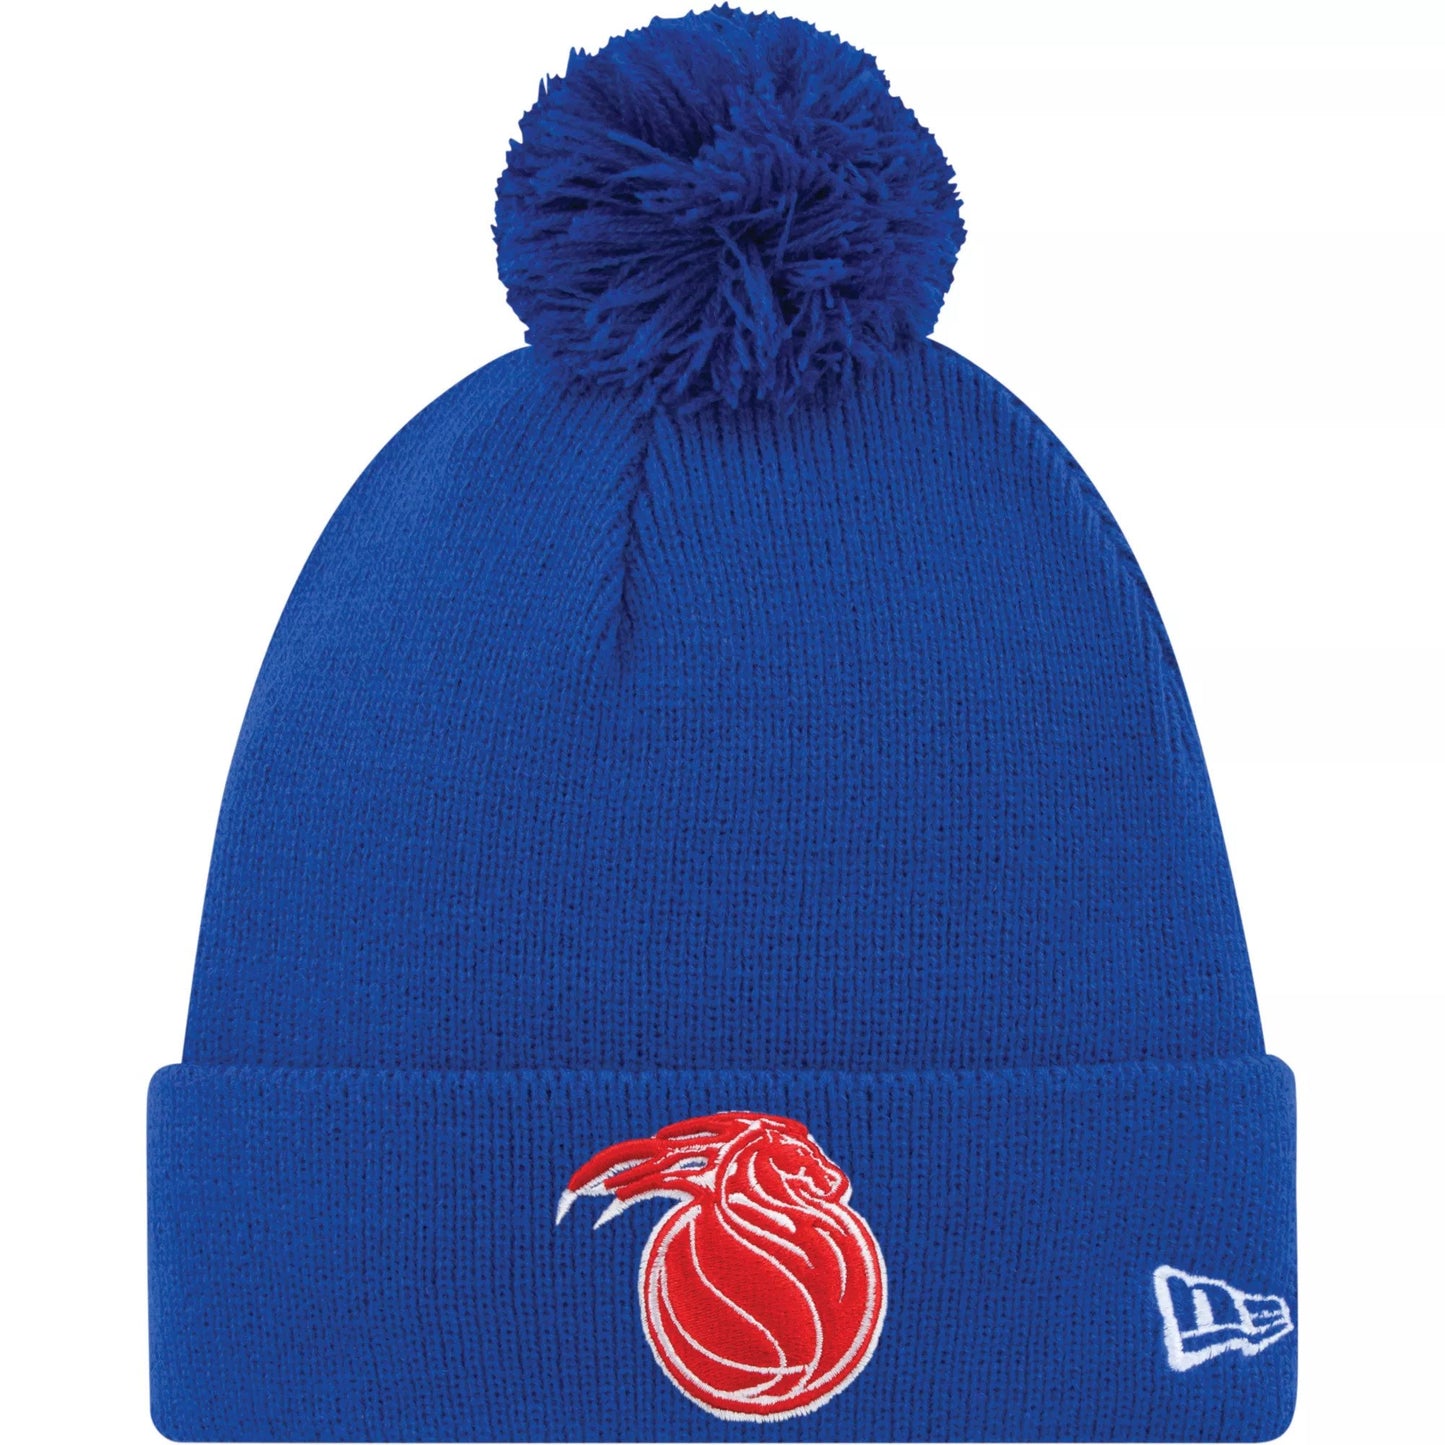 Detroit Pistons '21 NBA City Edition New Era Royal Alternate Cuffed Knit Hat